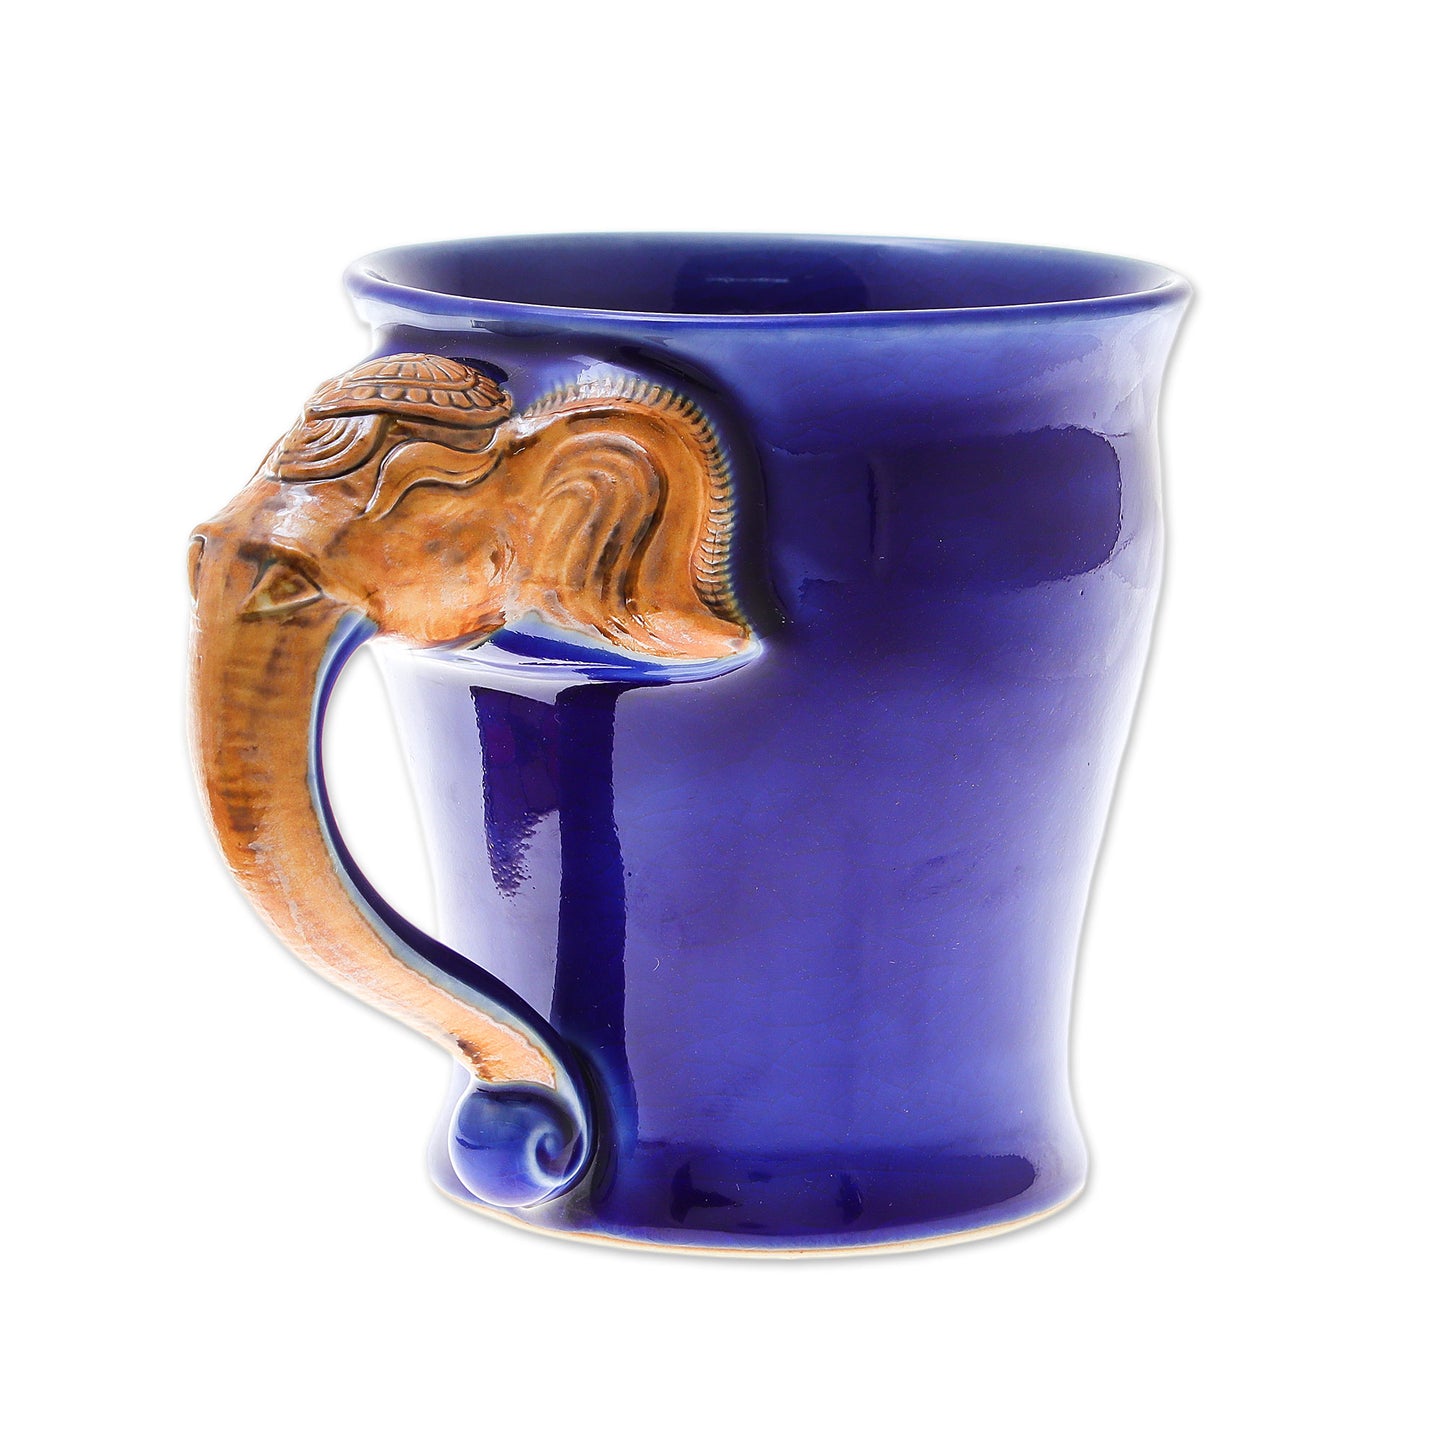 Elephant Handle in Blue Celadon Ceramic Elephant Mug in Blue from Thailand (10 oz.)